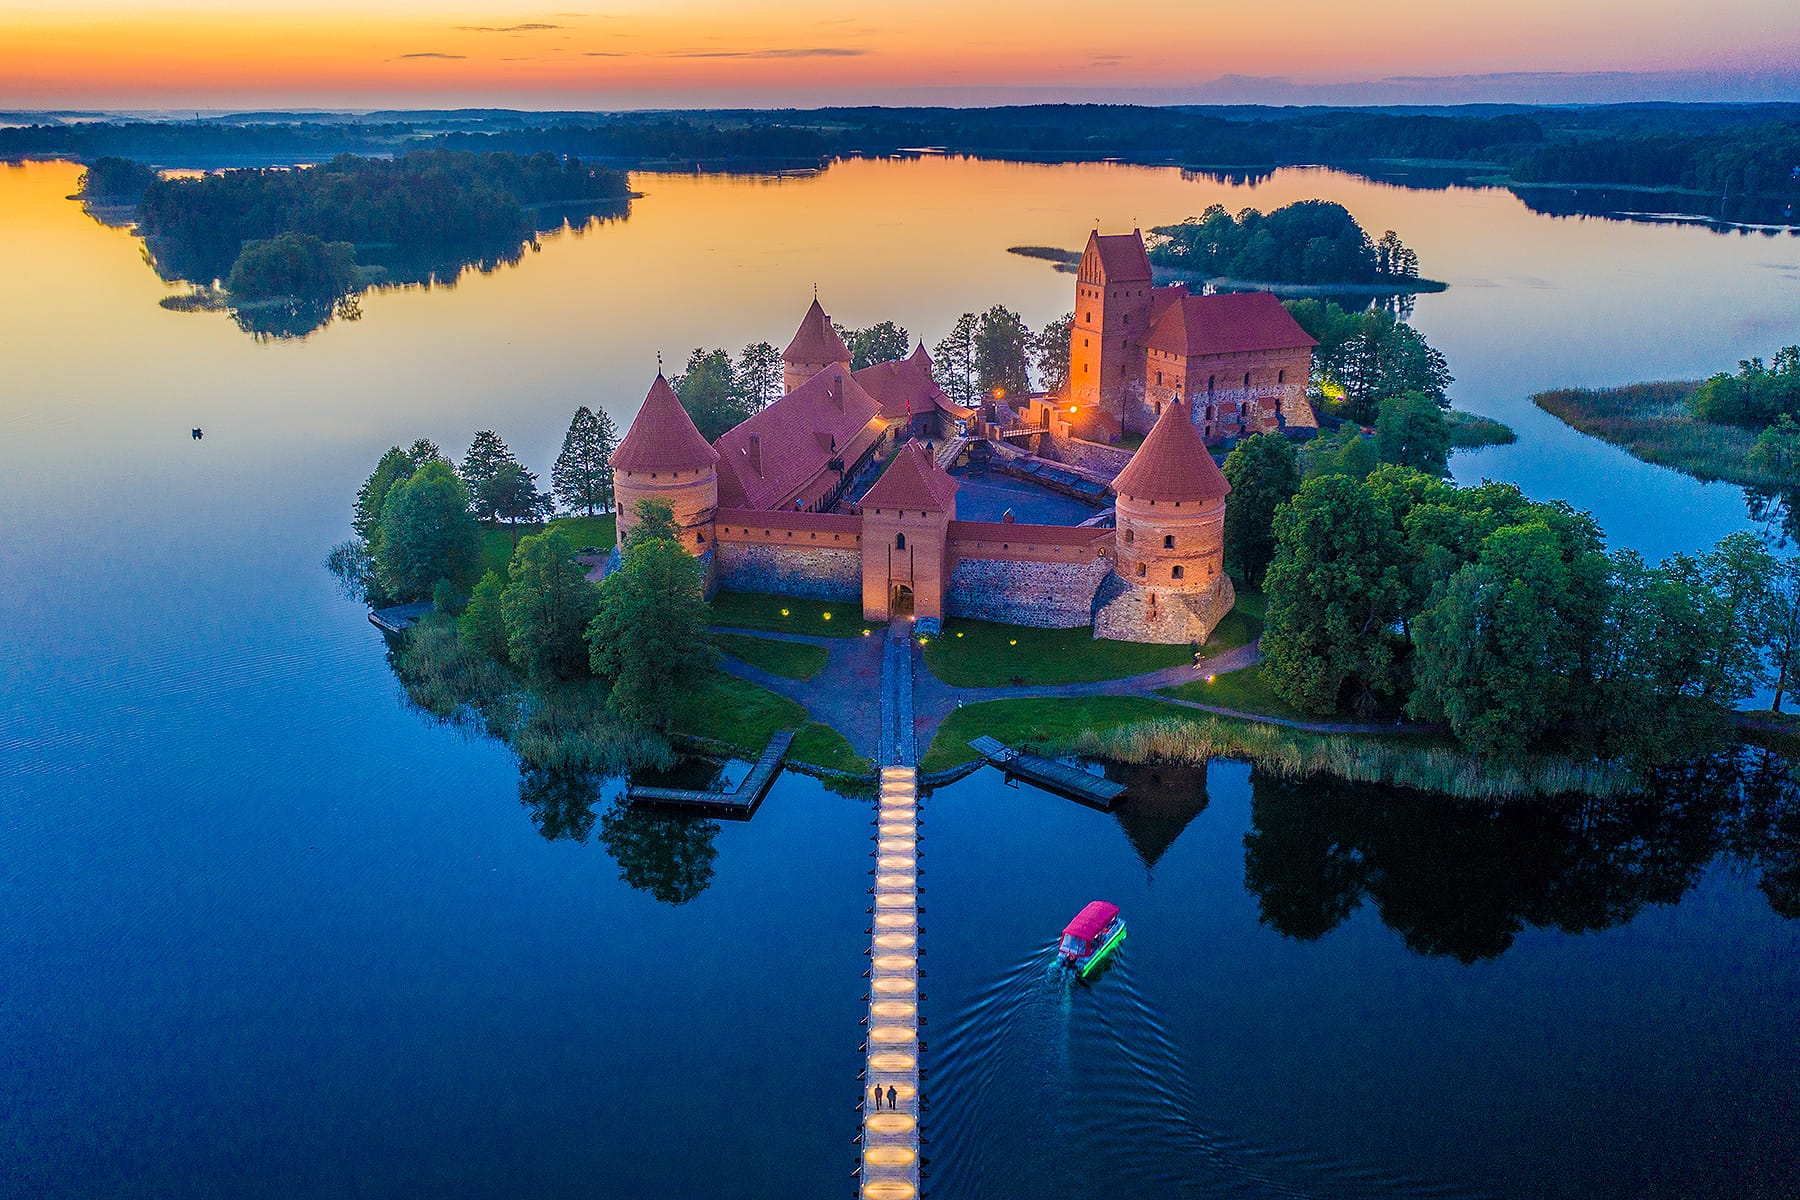 Trakai Island Castle, Lithuania; one of the enchanting castles